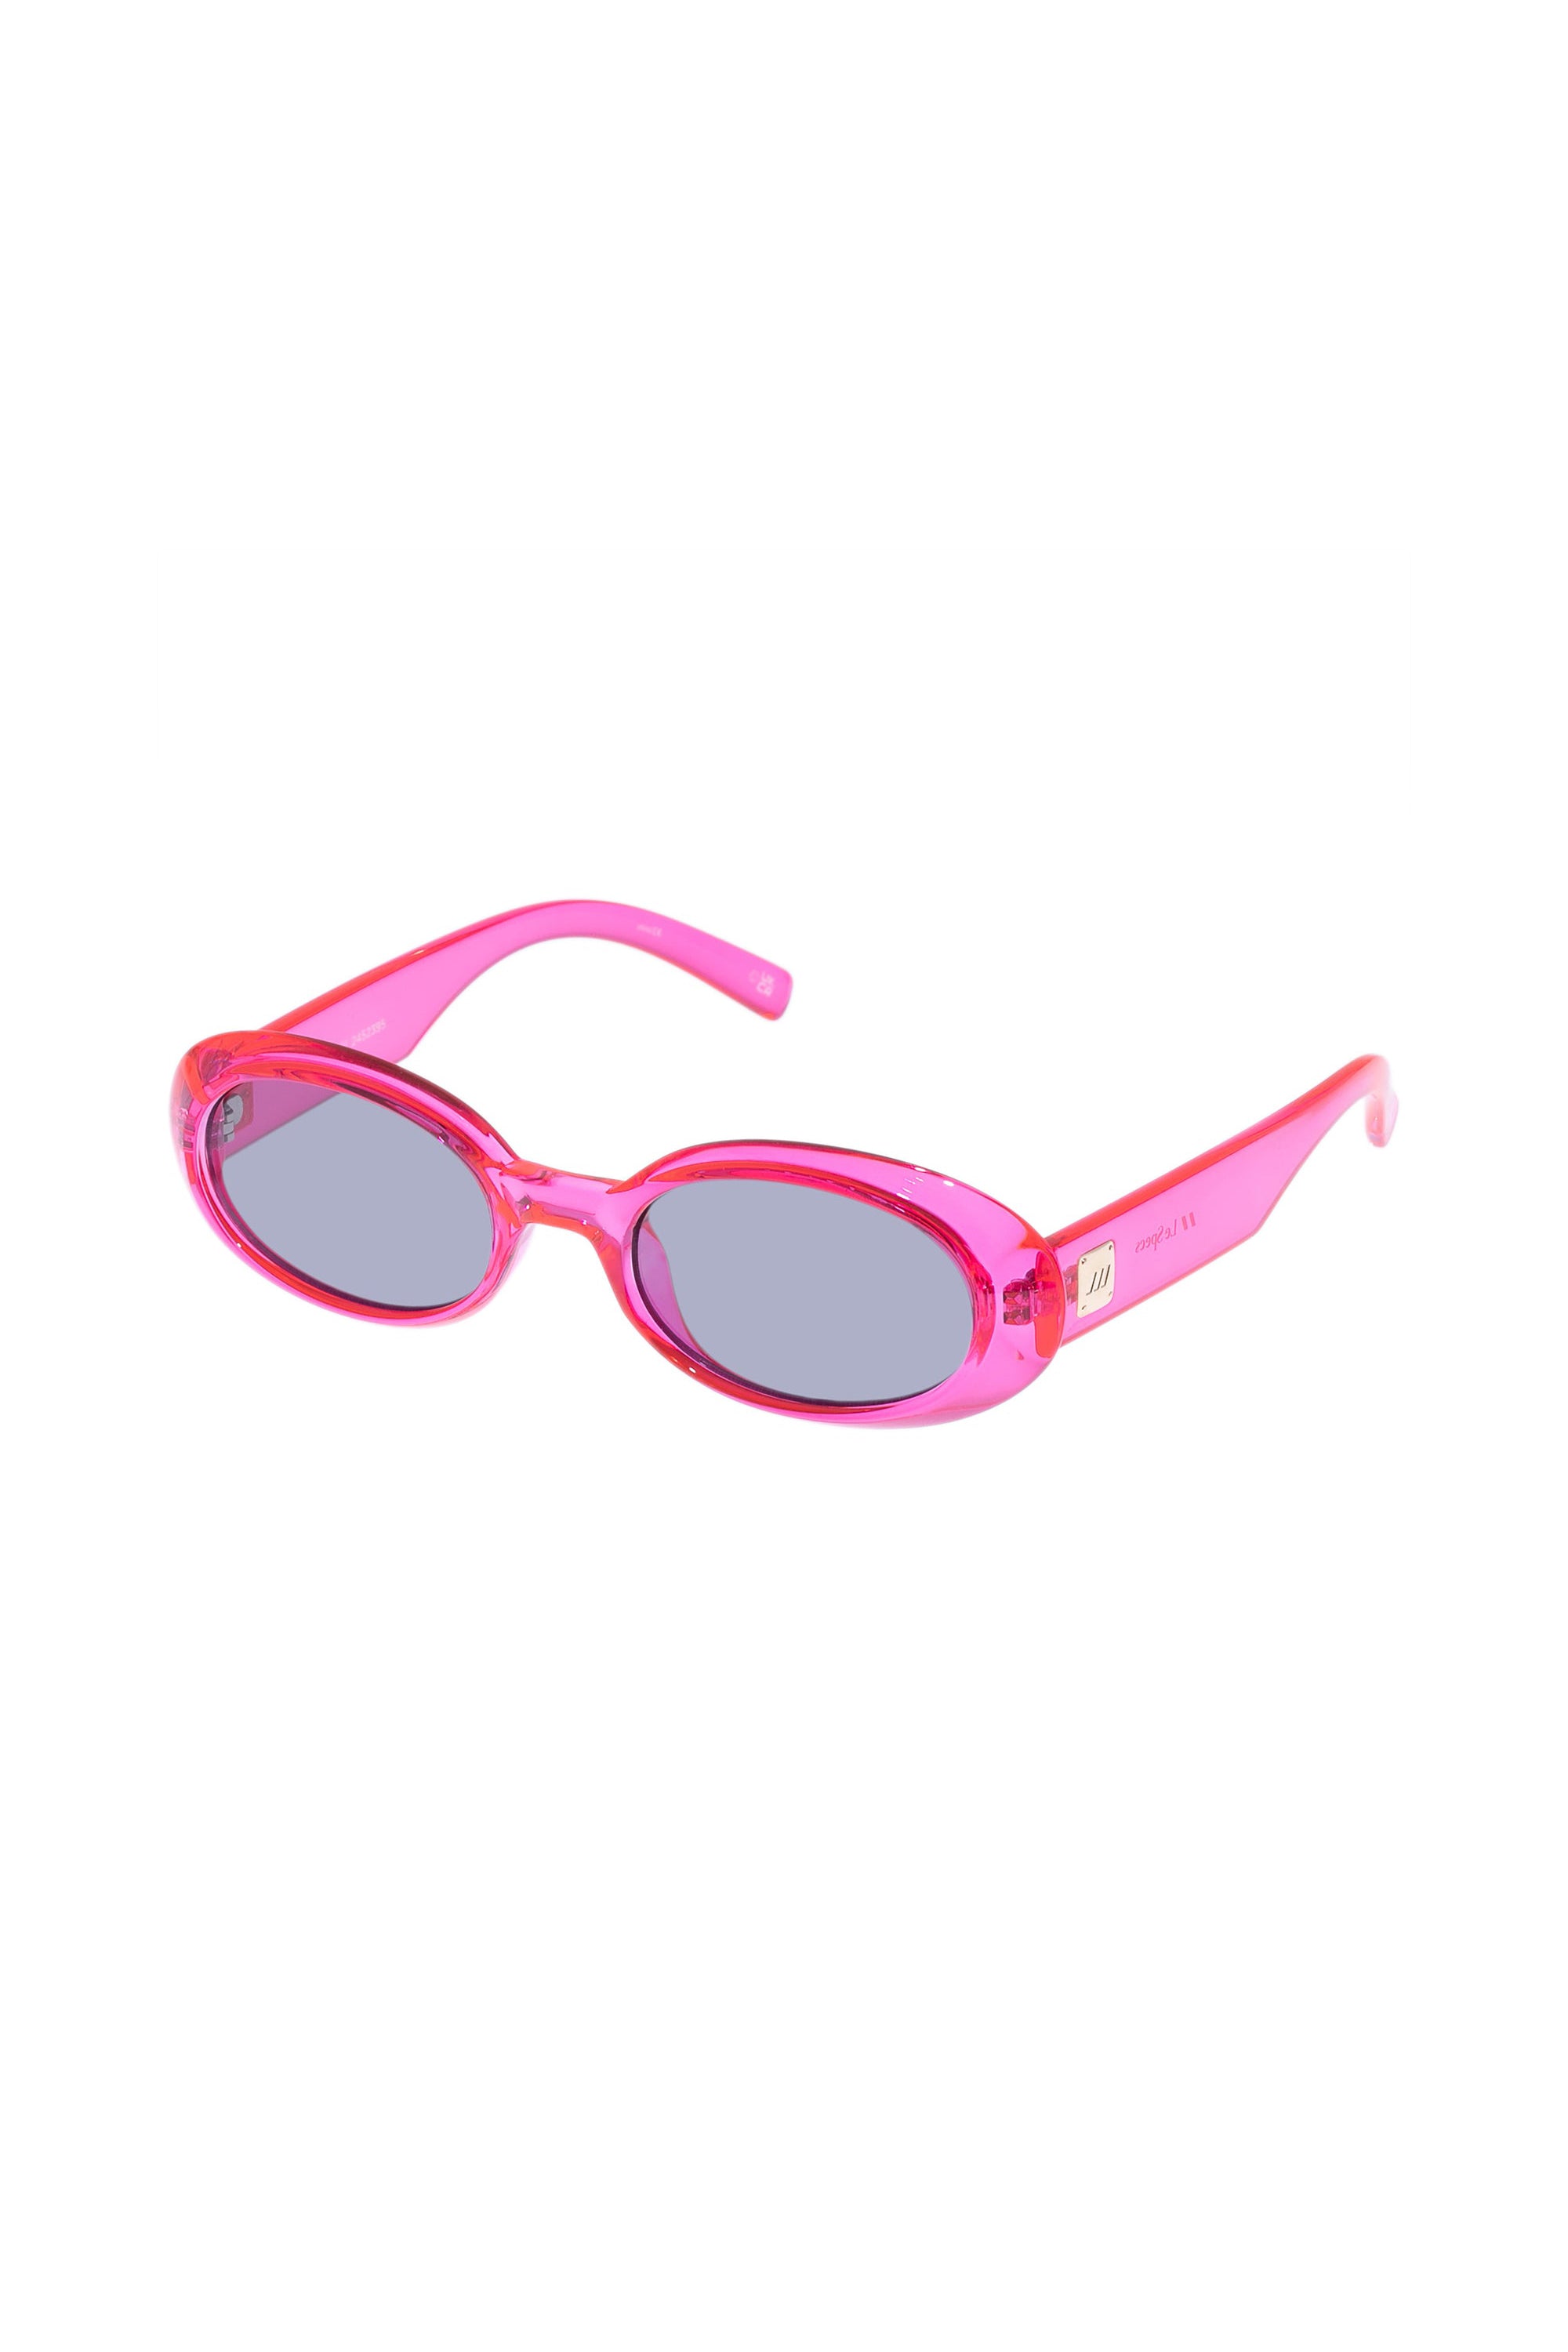 Work It! Sunglasses - Hyper Pink